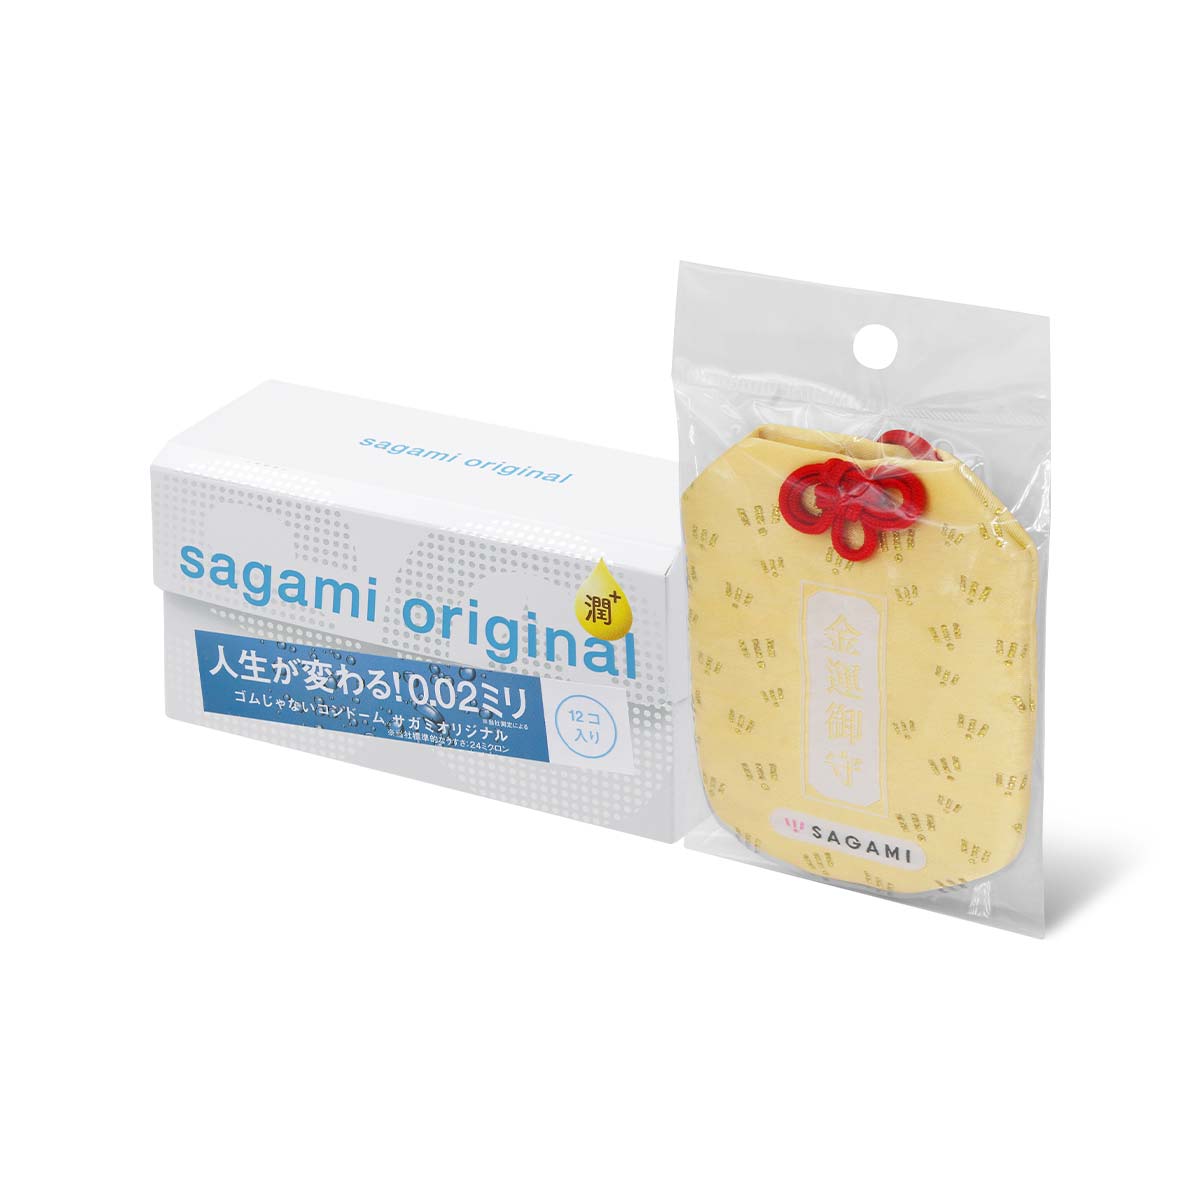 Sagami Original 0.02 Extra Lubricated 12's Pack PU Condom + Sagami Gold Omamori-p_1